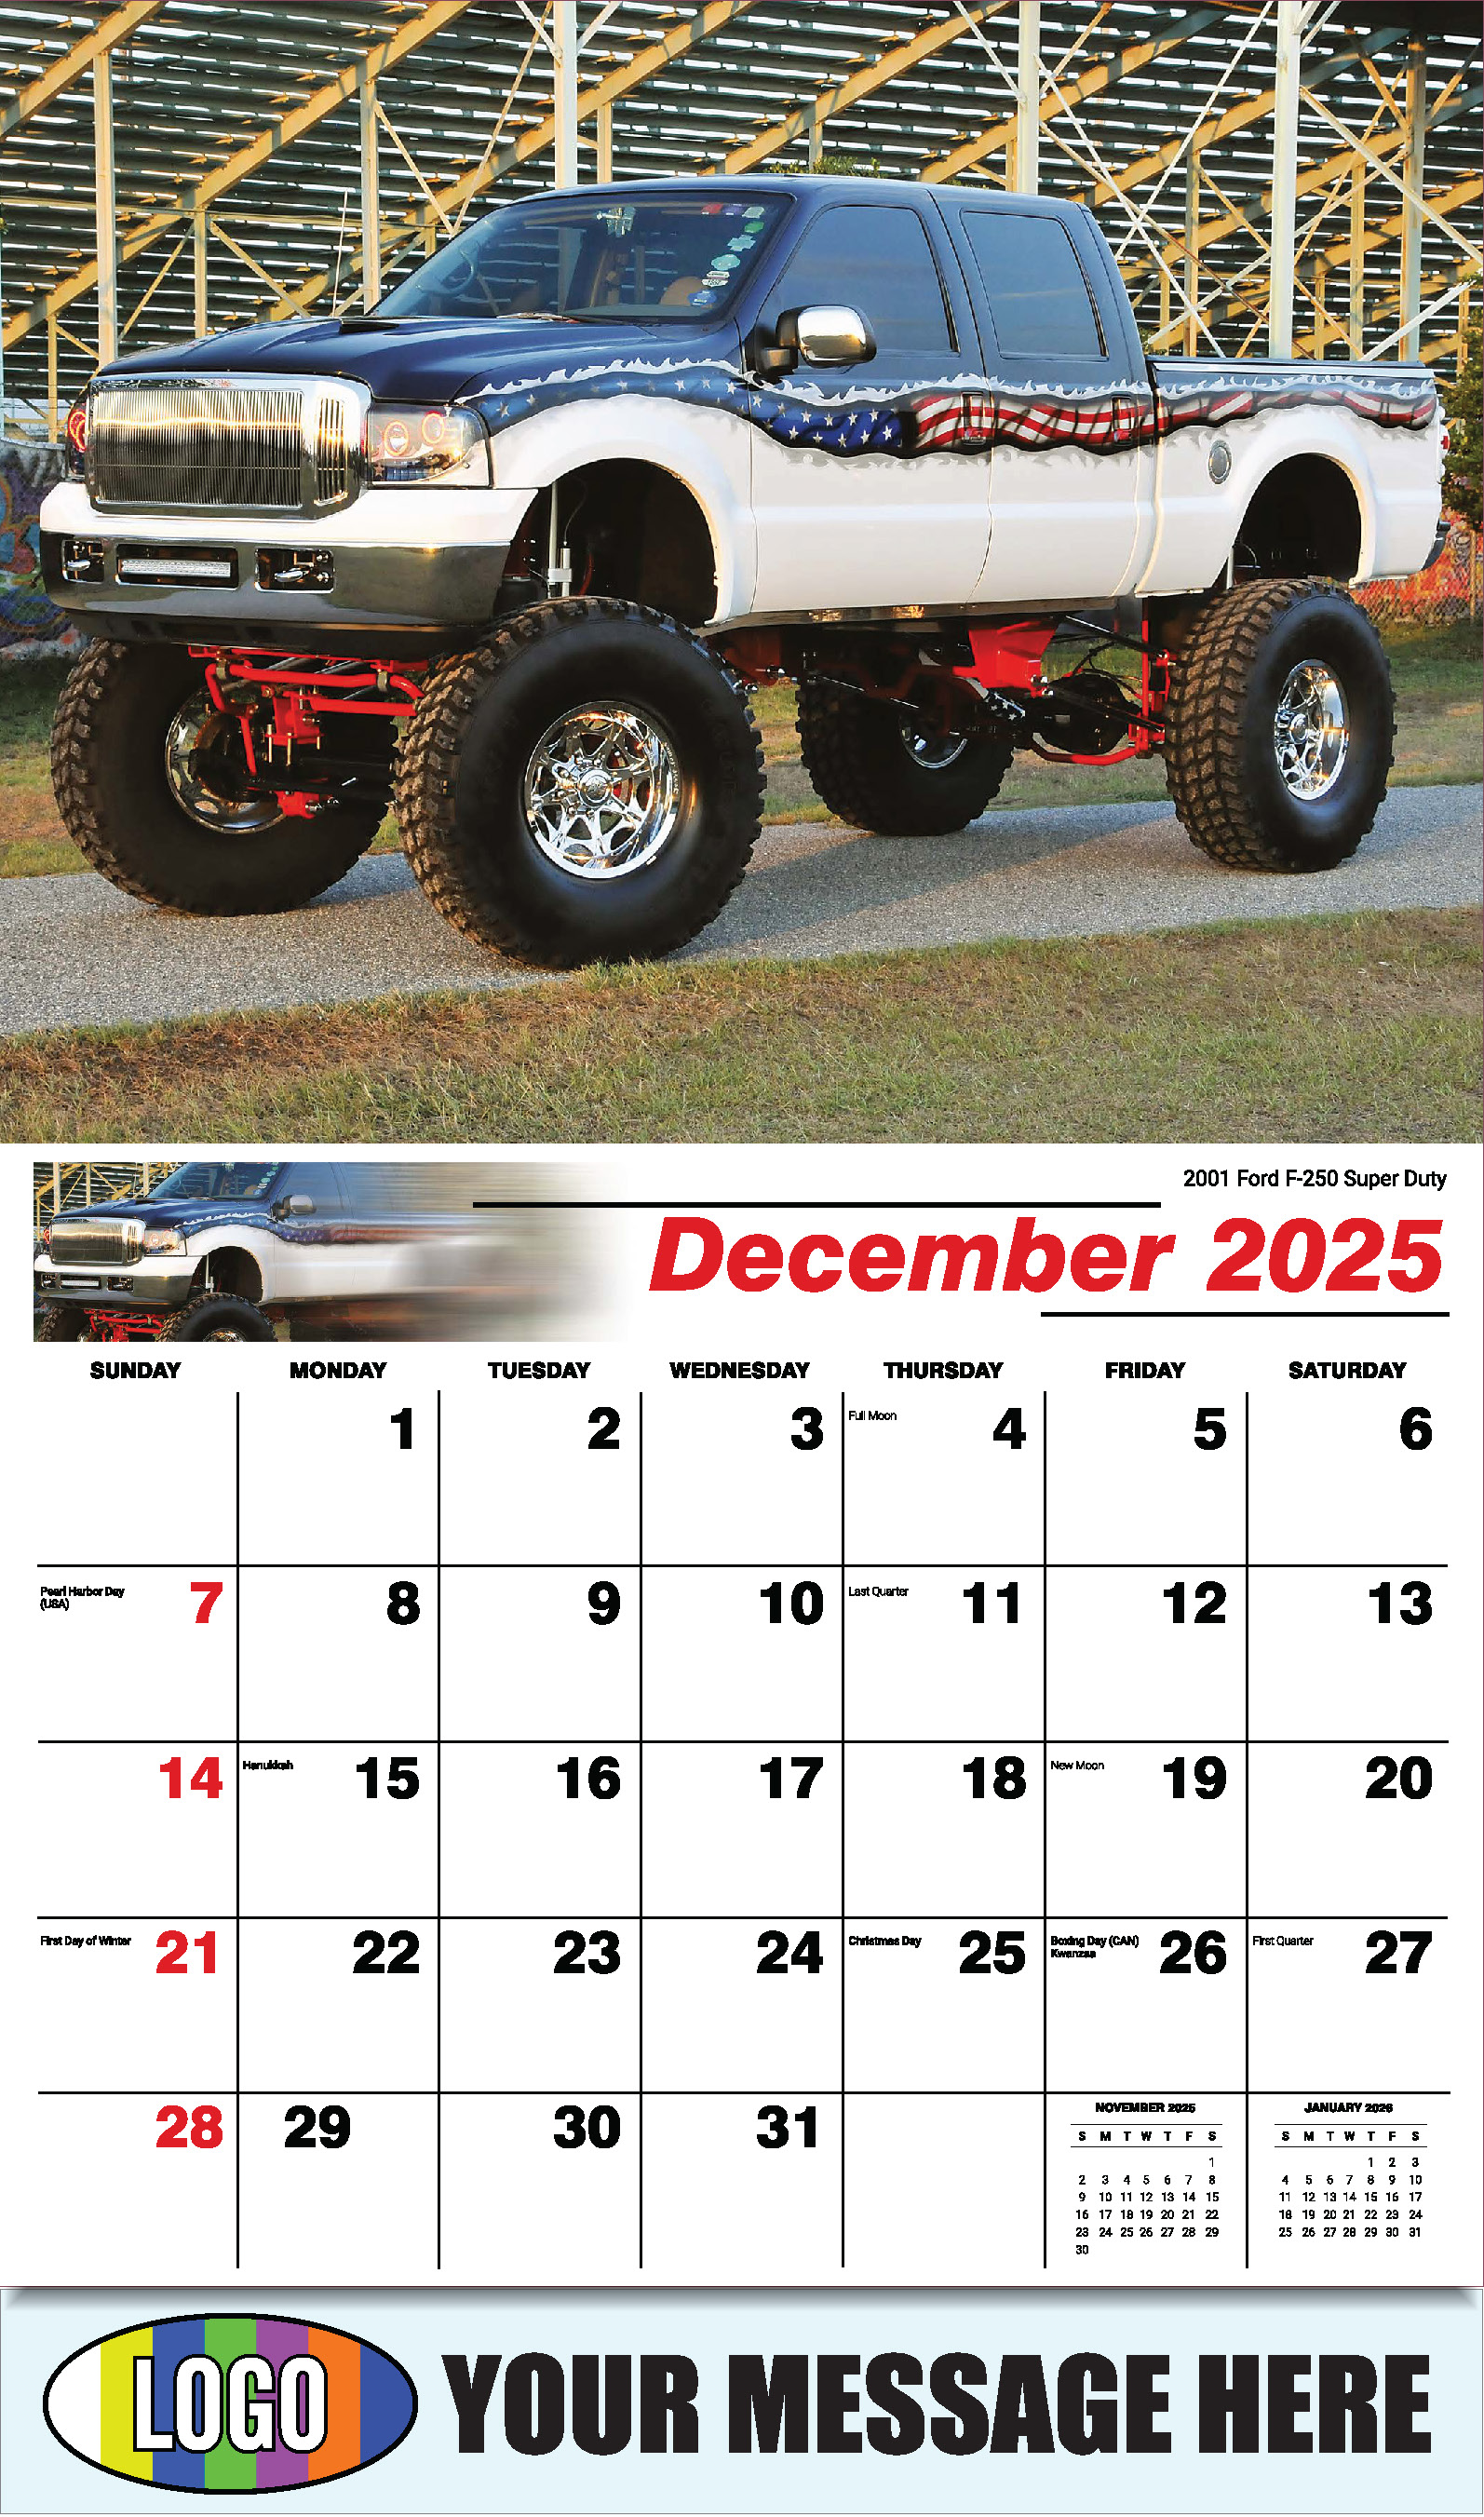 Pumped-Up Pickups 2025 Automotive Business Promo Calendar - December